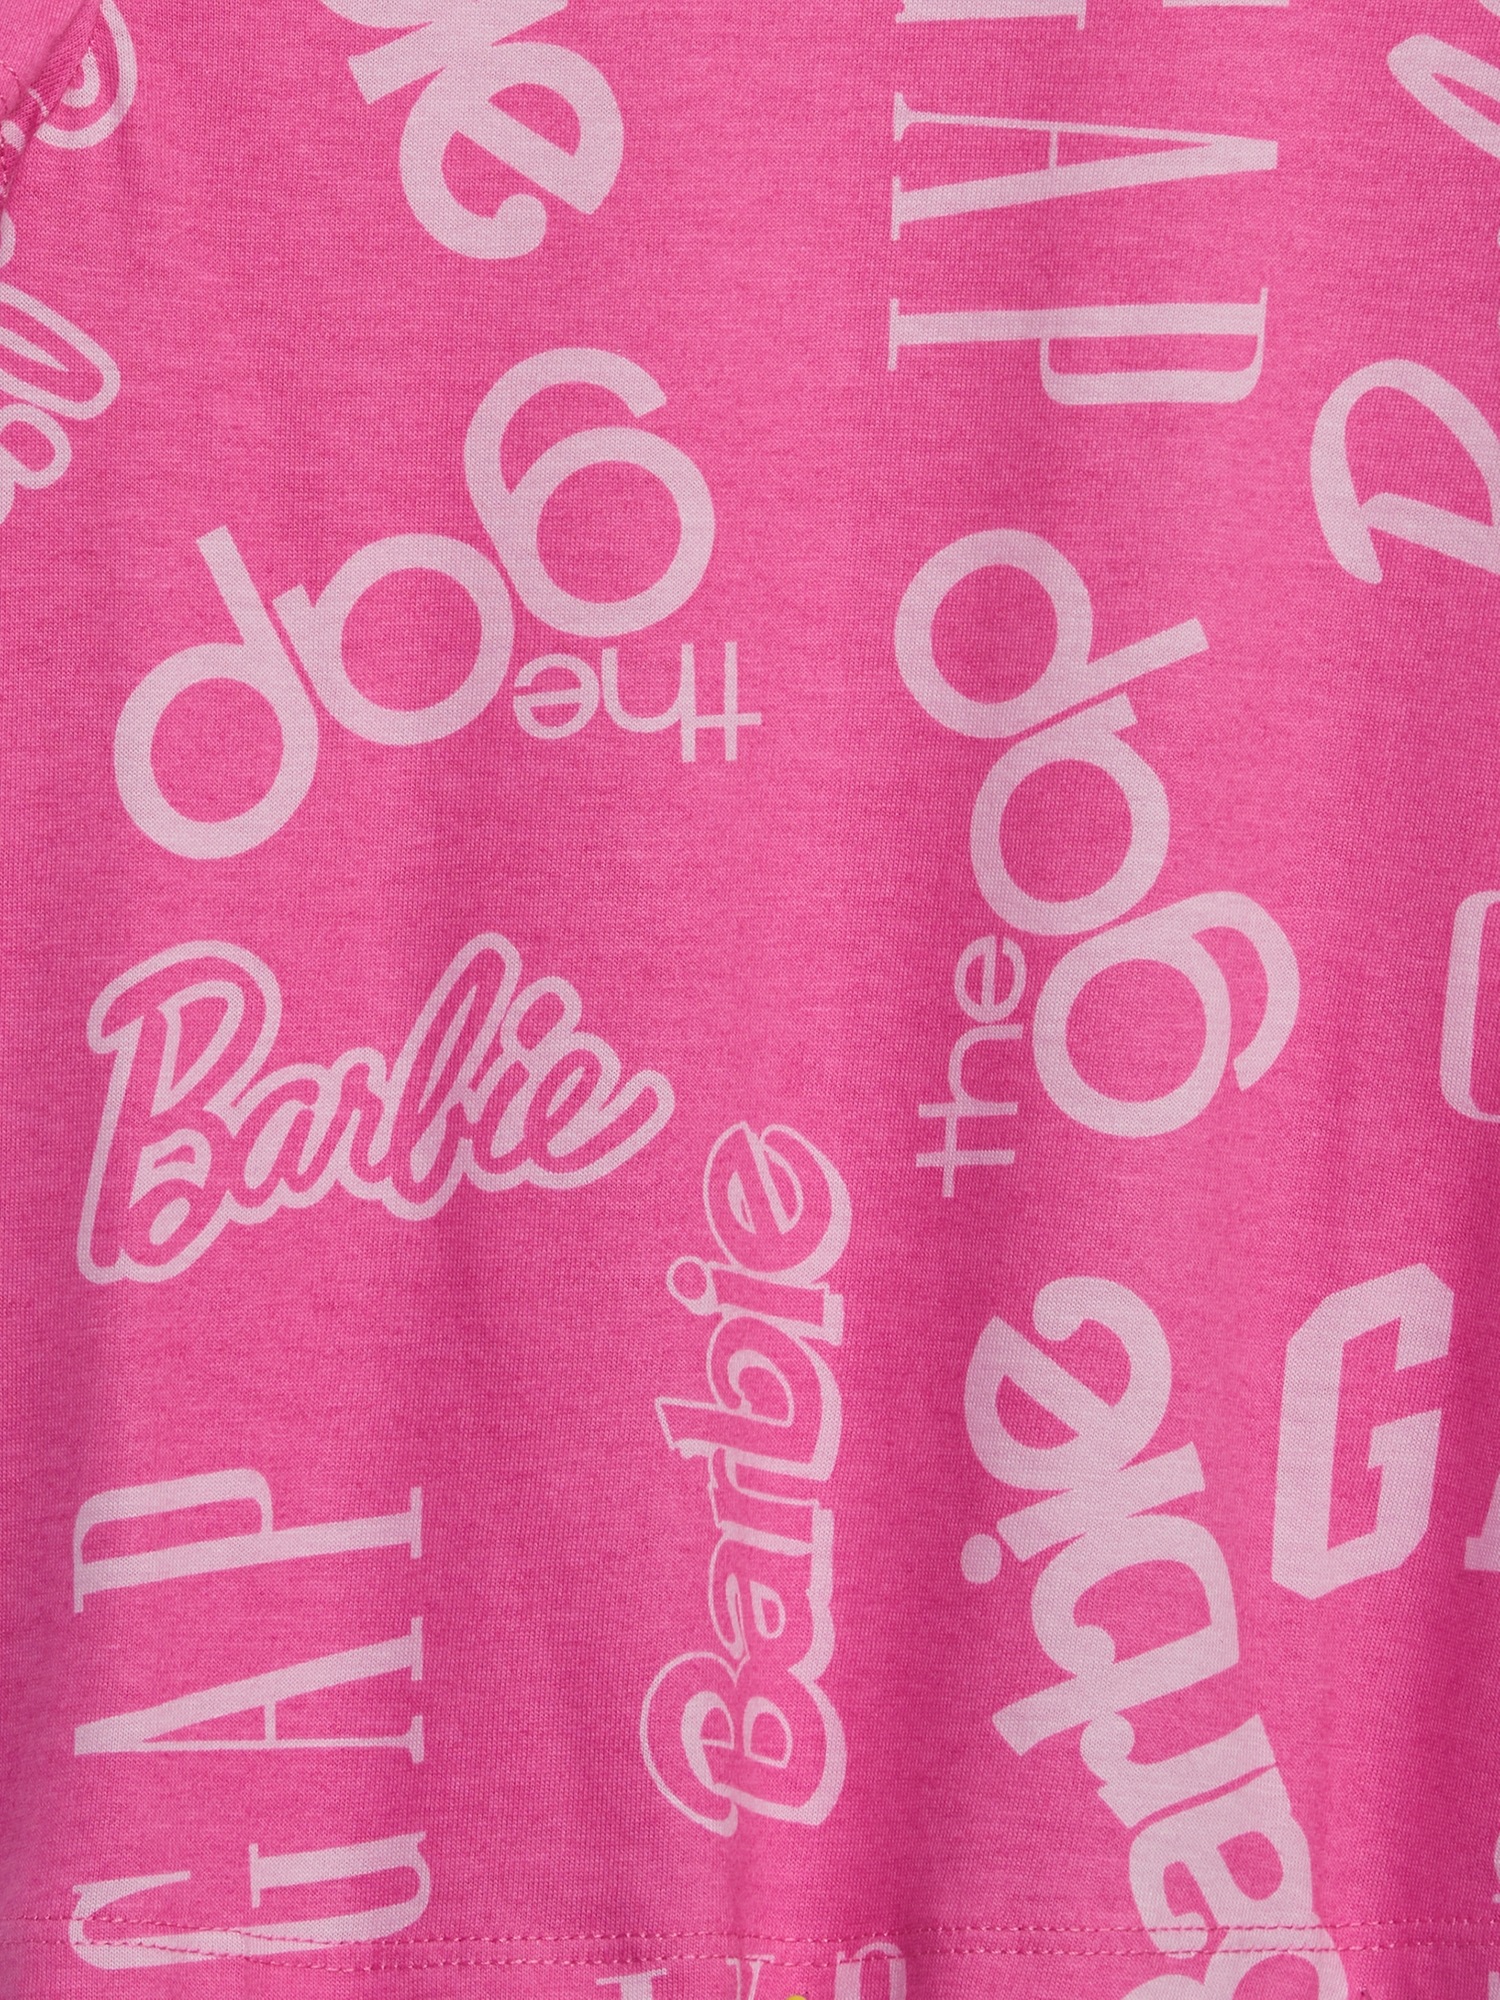 Barbie Icons Cotton Fabric